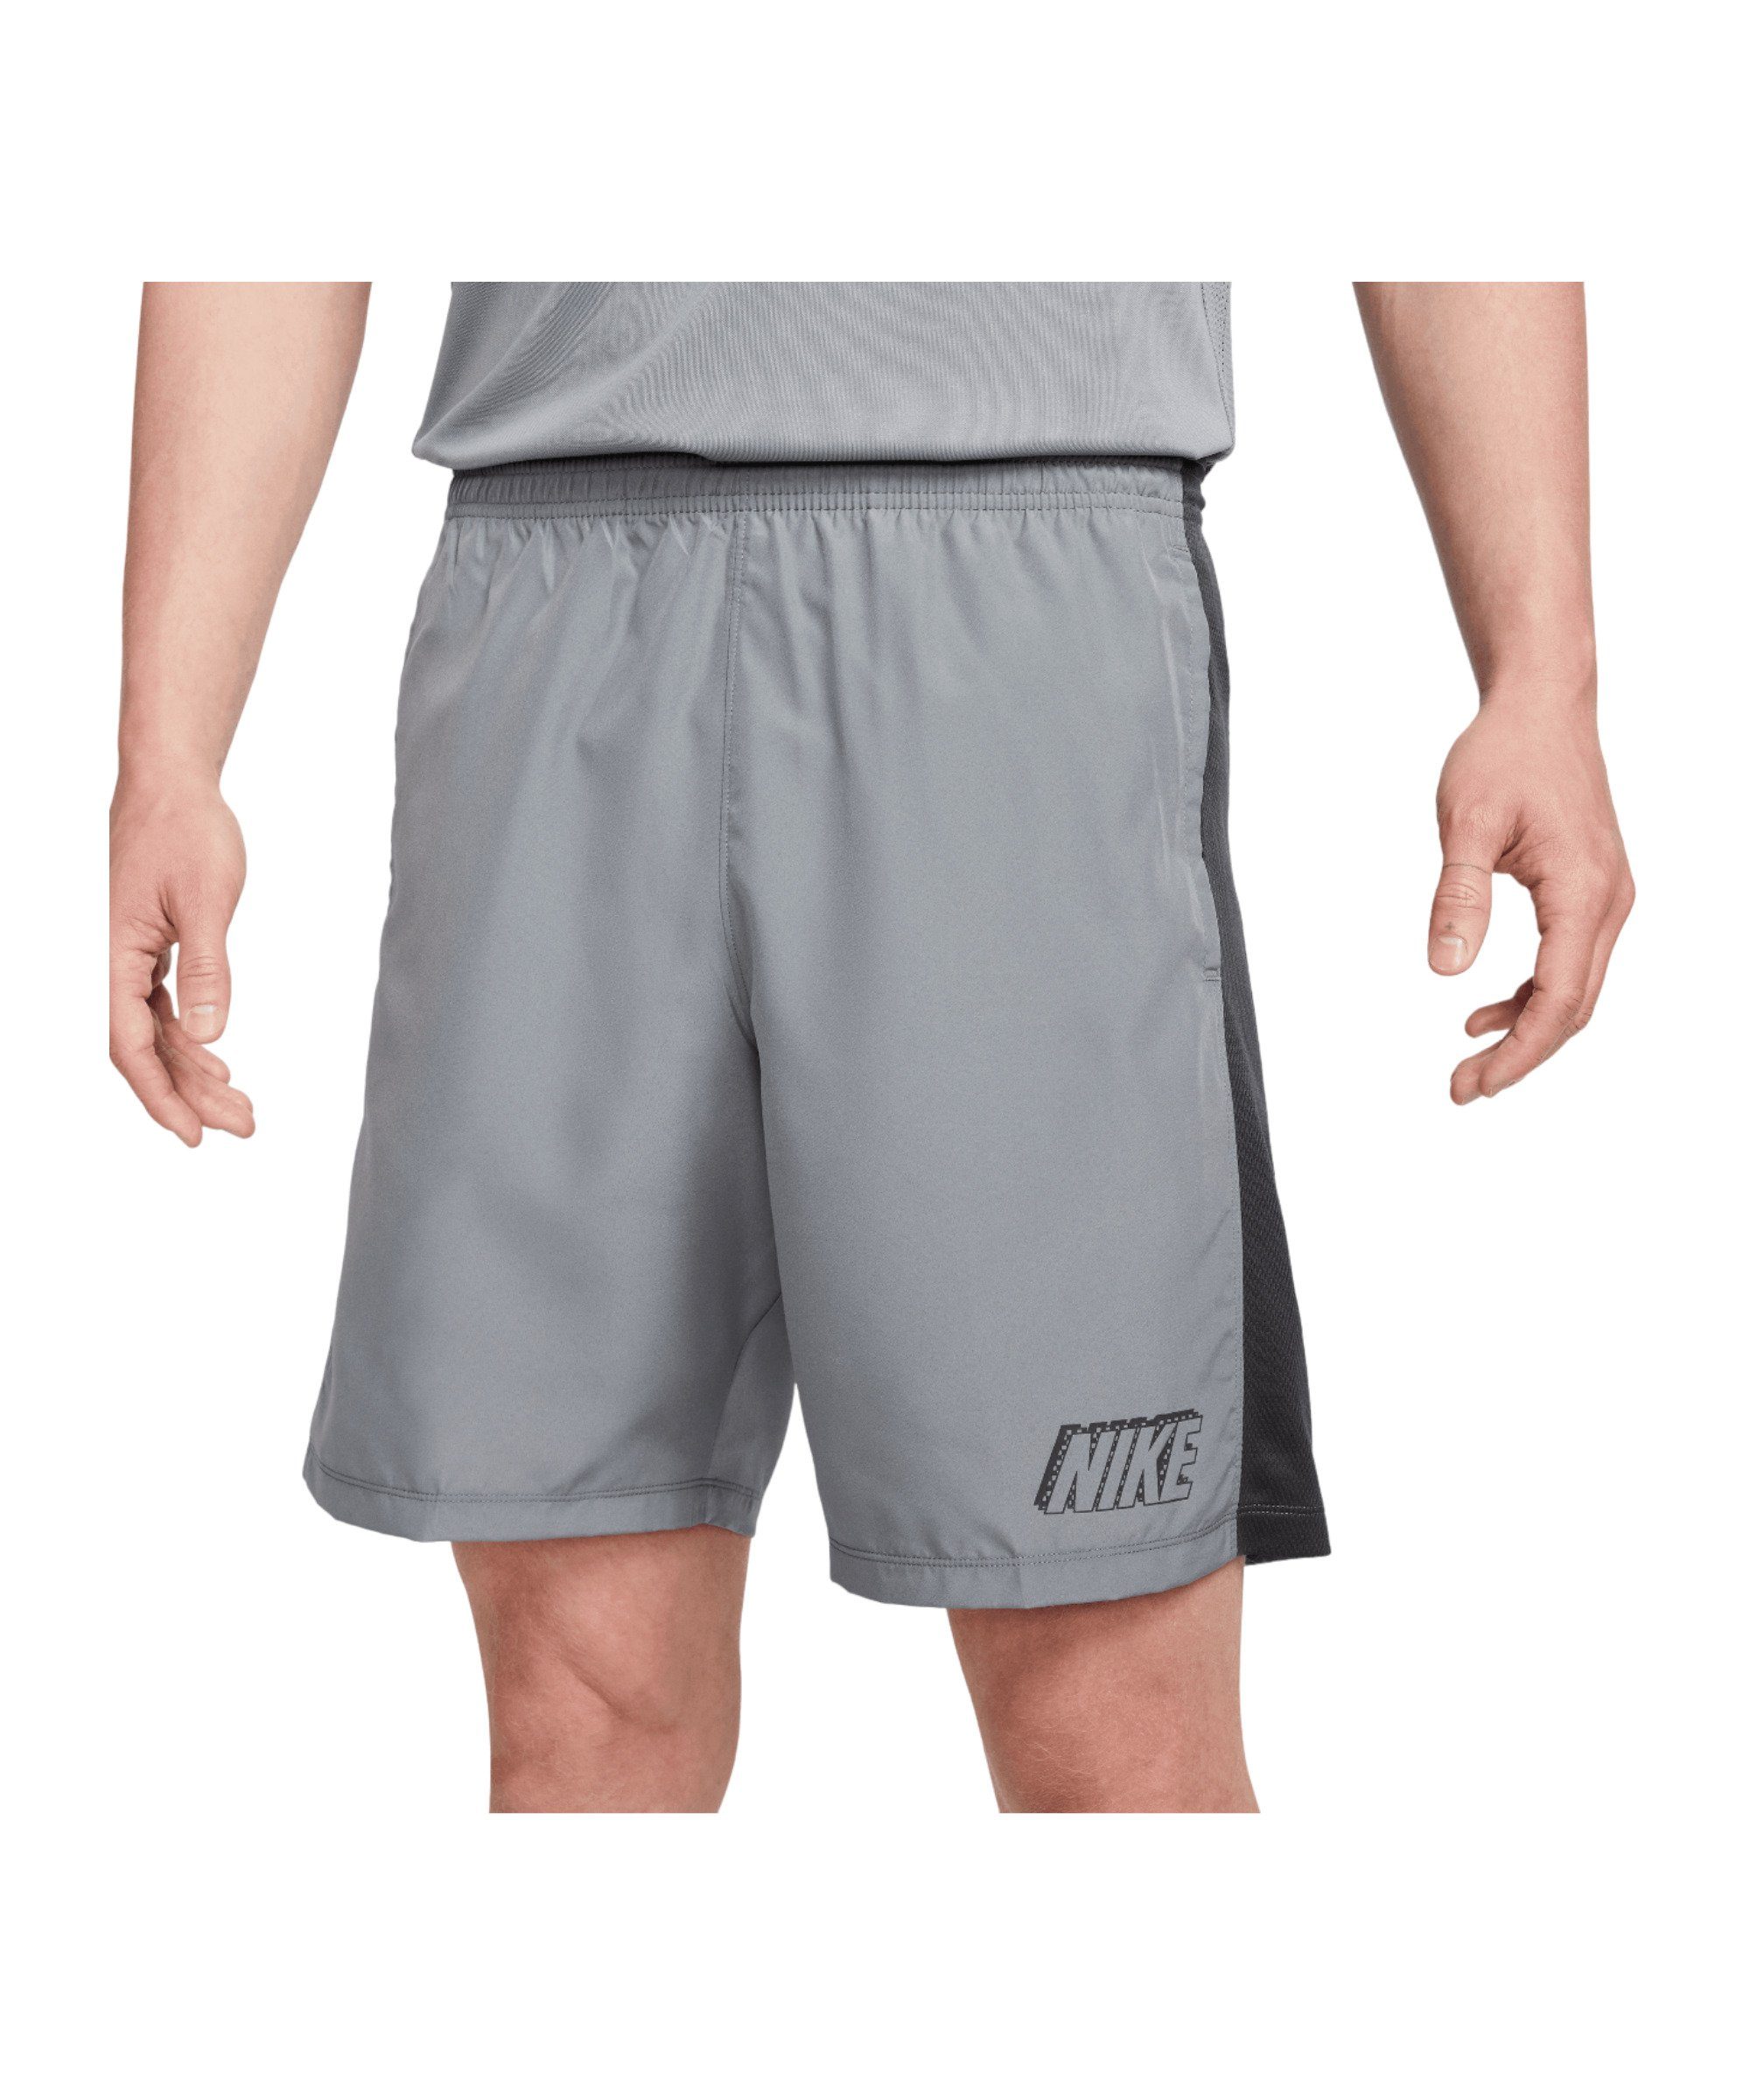 Short graugraugrau Academy Nike Sporthose